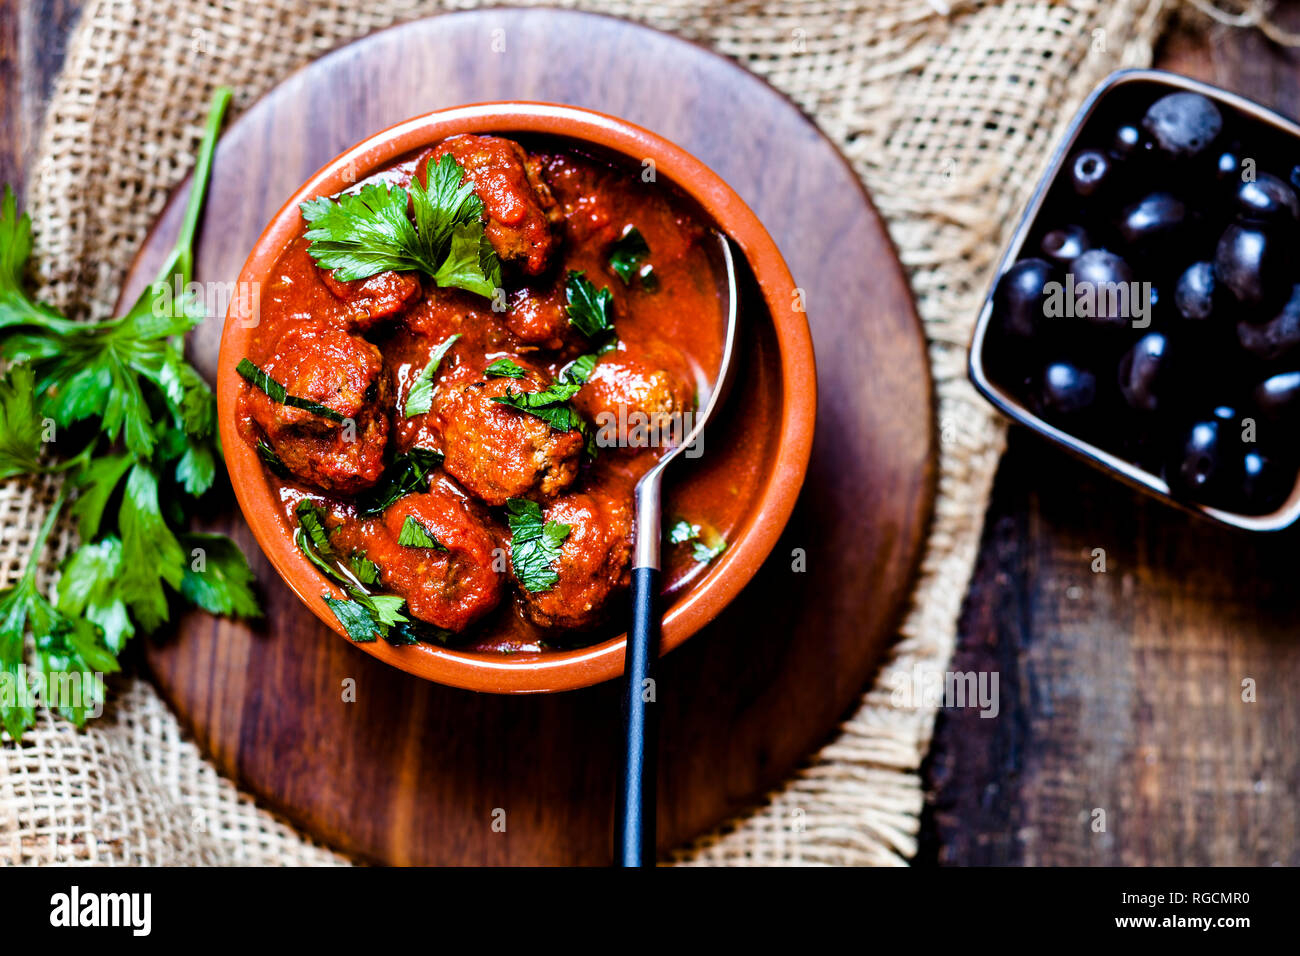 Spanish Albondingas, meatballs in spicy tomato sauce Stock Photo